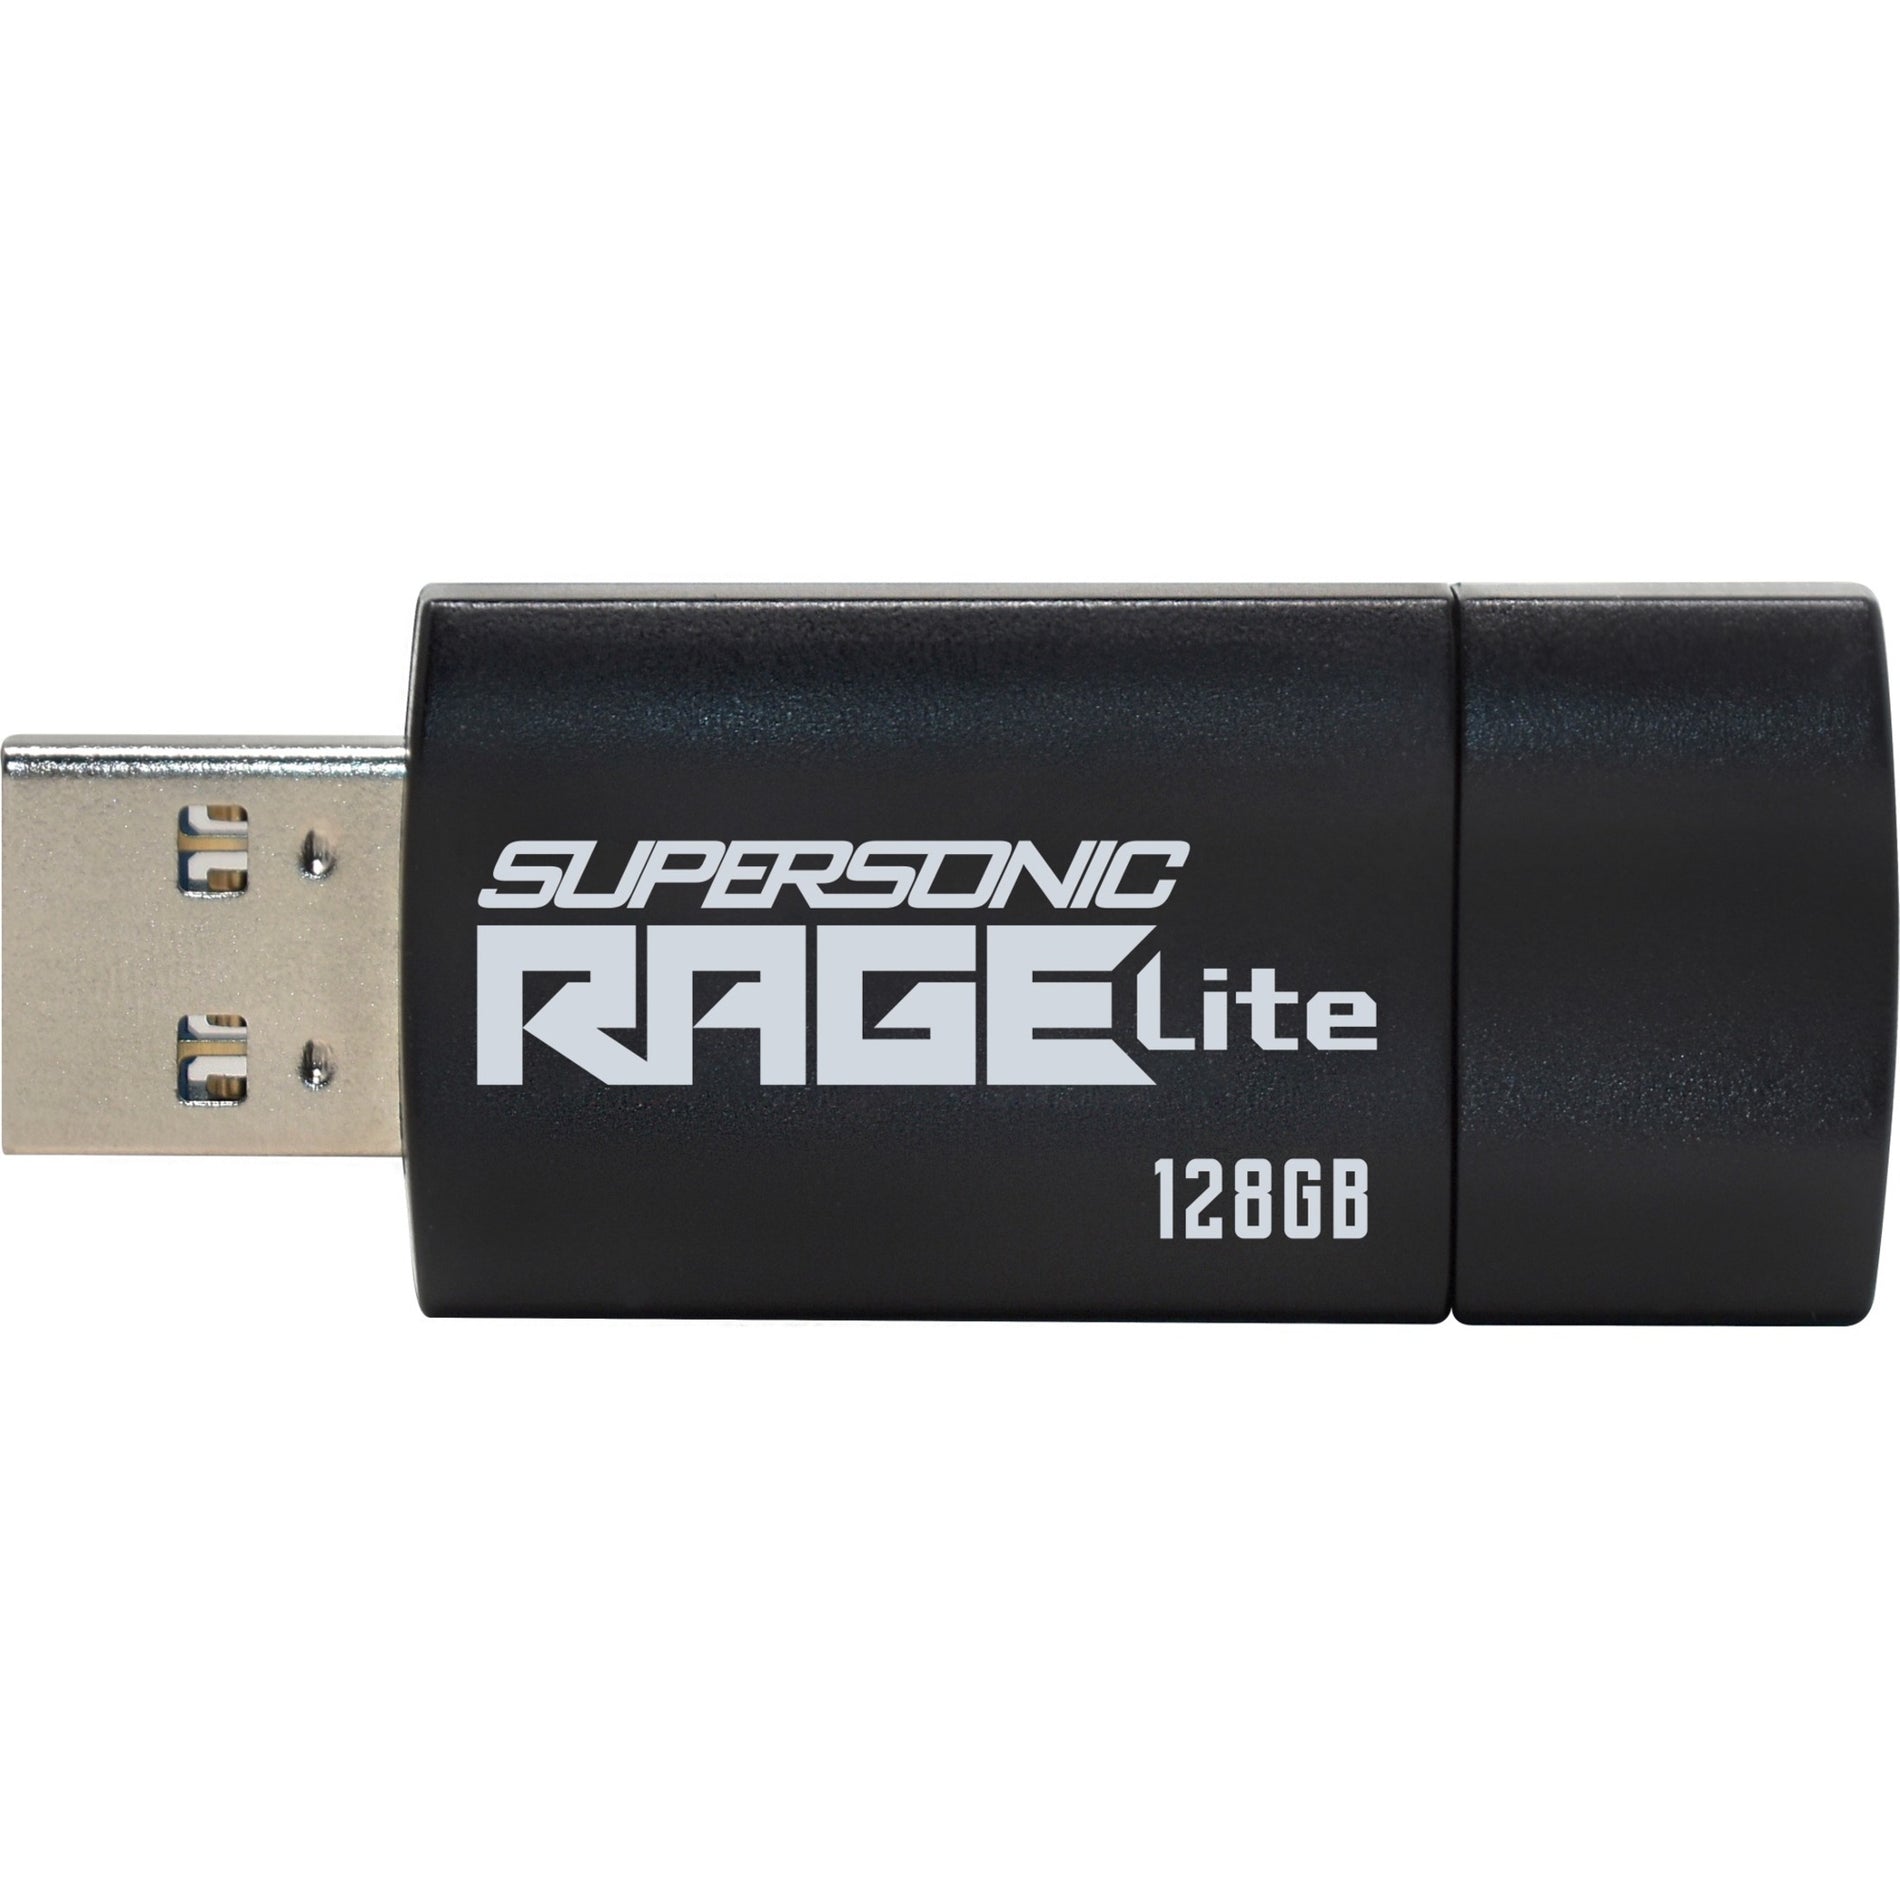 Patriot Memory PEF128GRLB32U Supersonic Rage Lite USB 3.2 Gen 1 Flash Drives - 128GB, Retractable, Durable